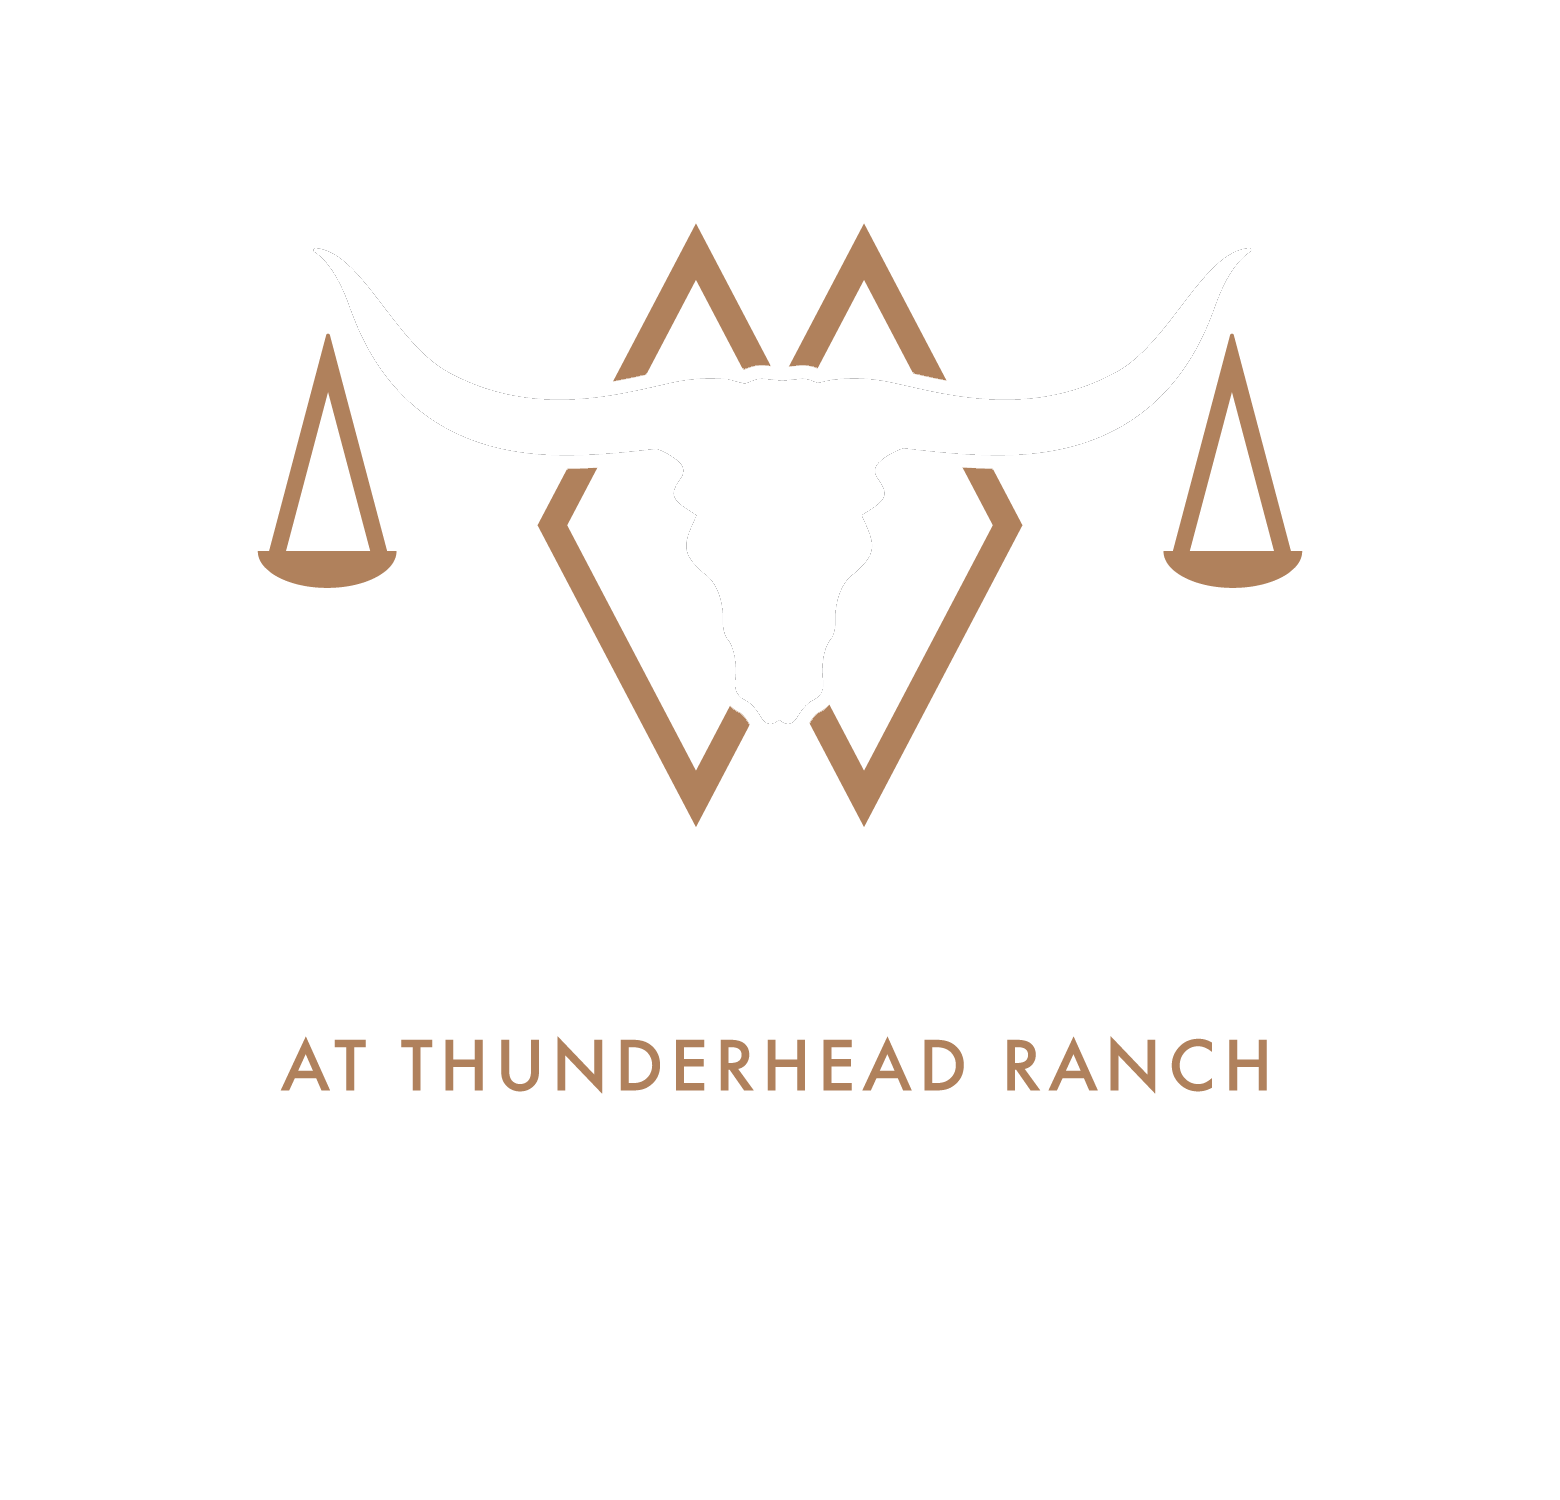 Gerry Spence Method at Thunderbird Ranch